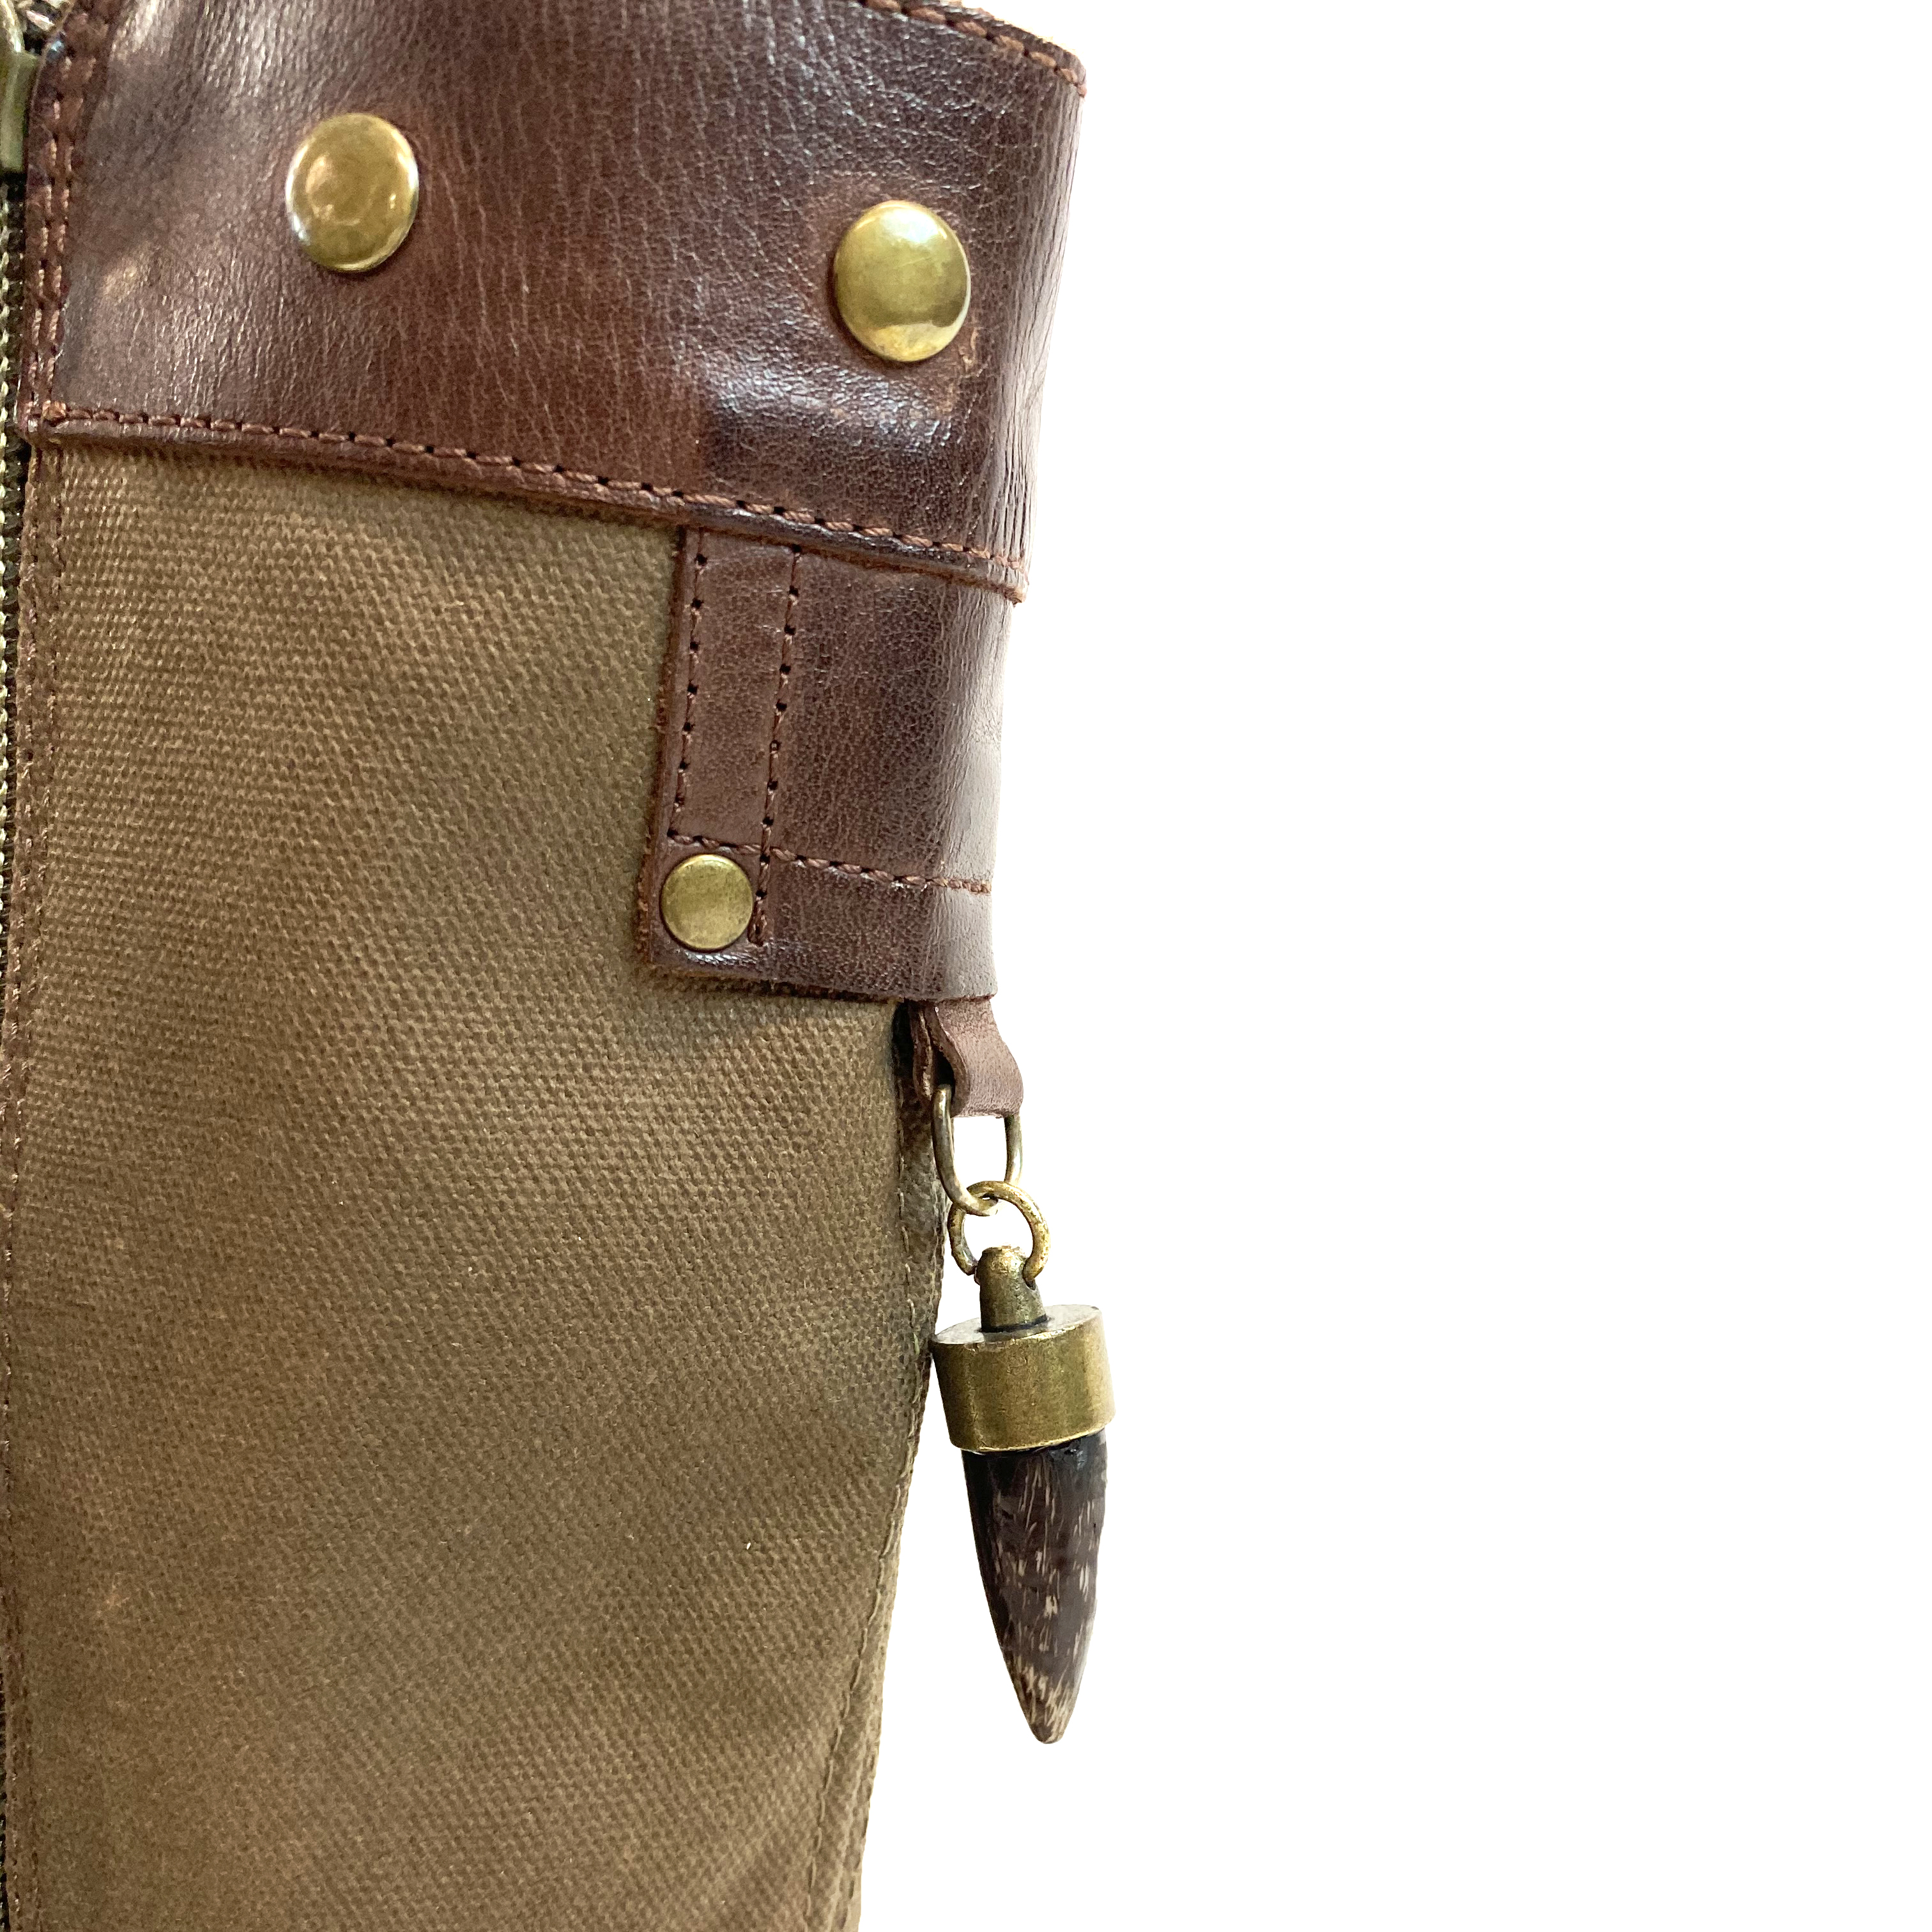 Kowalski Leather Vintage Style Knee Boots